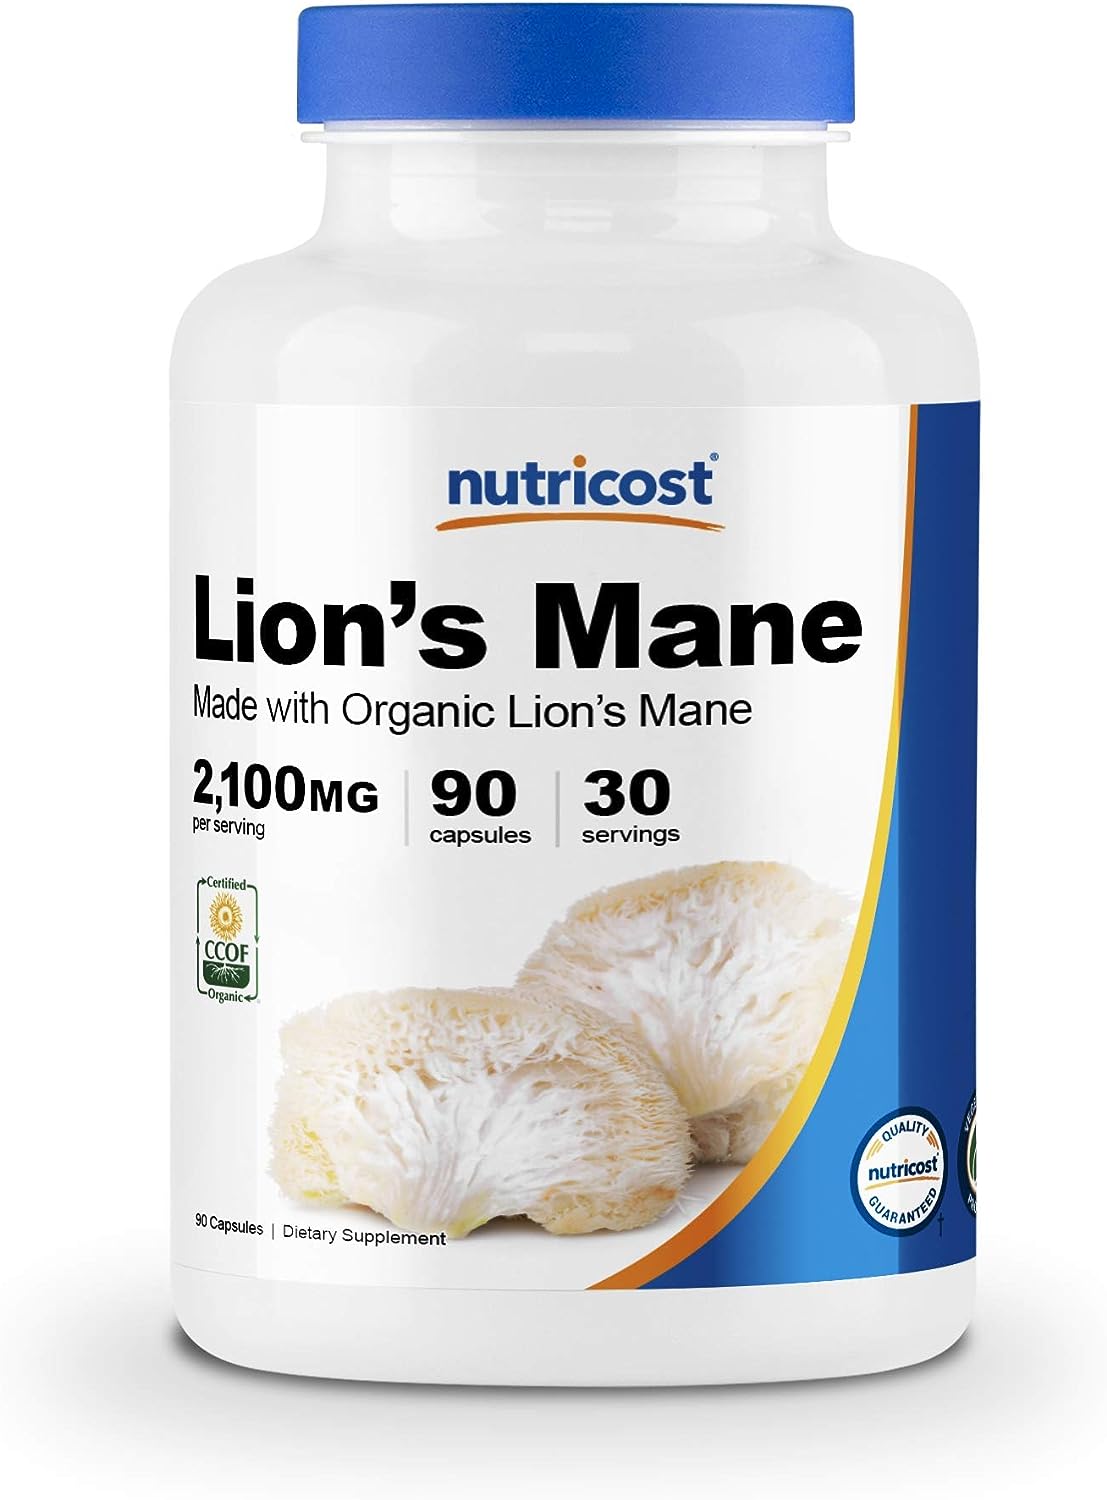 Nutricost Lion's Mane Mushroom Capsules 1650mg, 30 Servings - CCOF Certified Made with Organic, Vegetarian, Gluten Free, 550mg Per Capsule, 90 Capsules